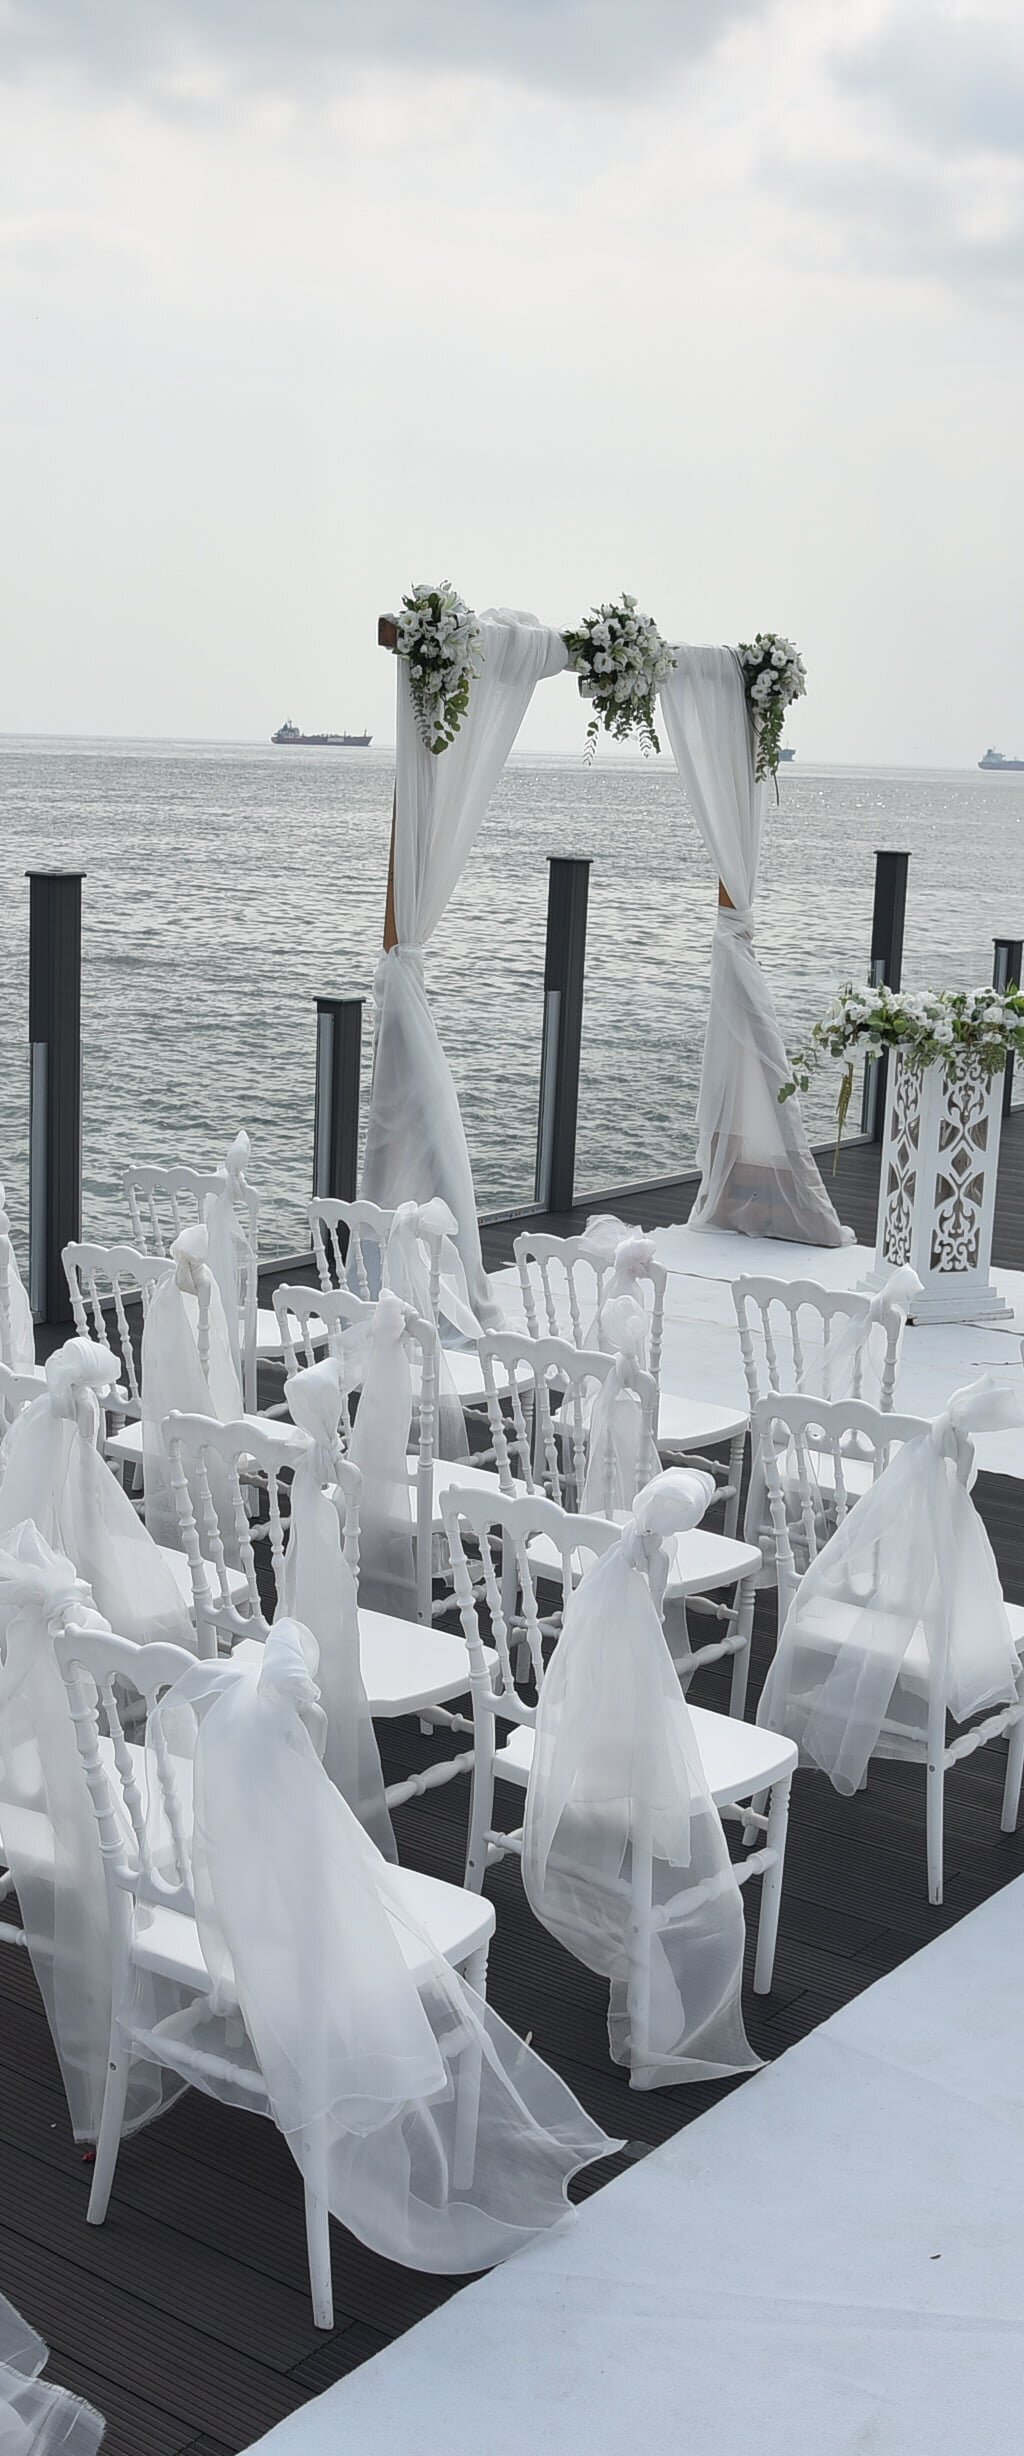 Nossa Costa Ataköy Marina Düğün